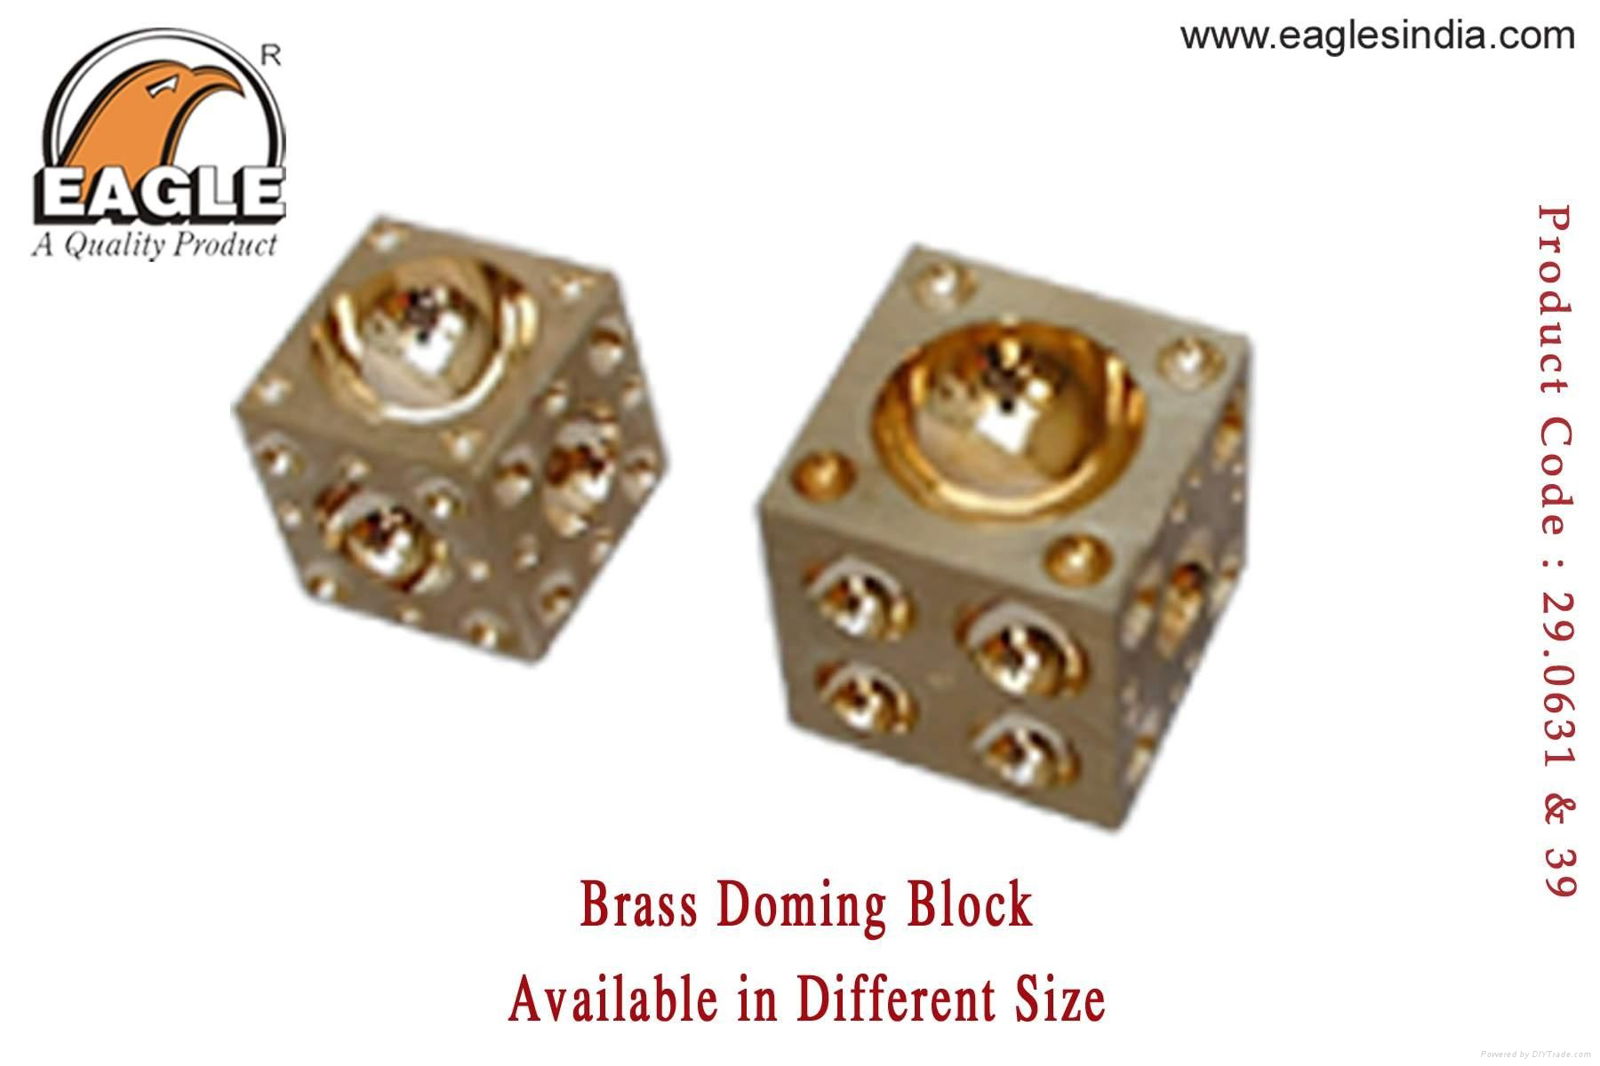 Brass doming block